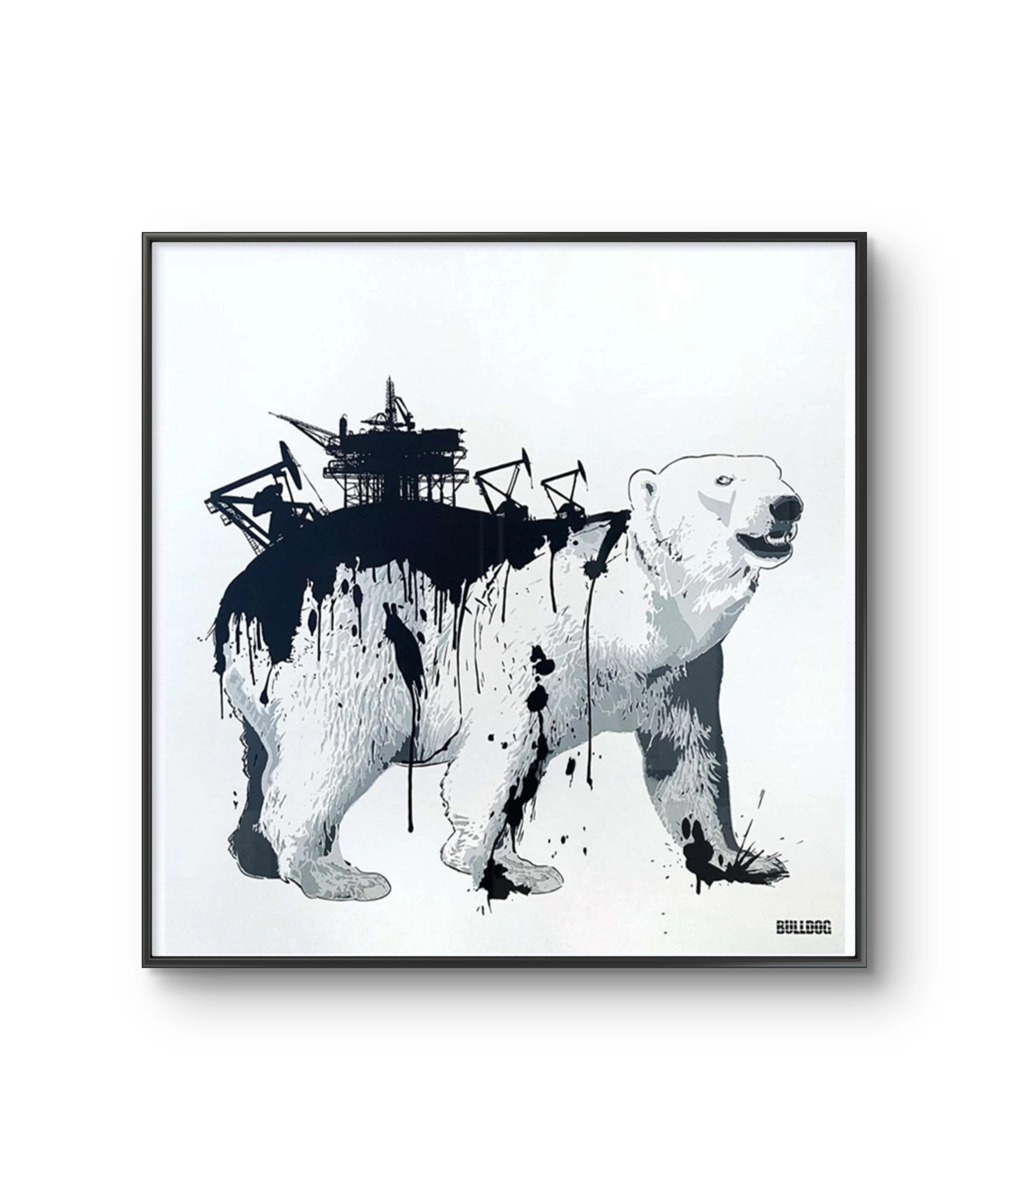 Bulldog - en kunstner hos galleri M35